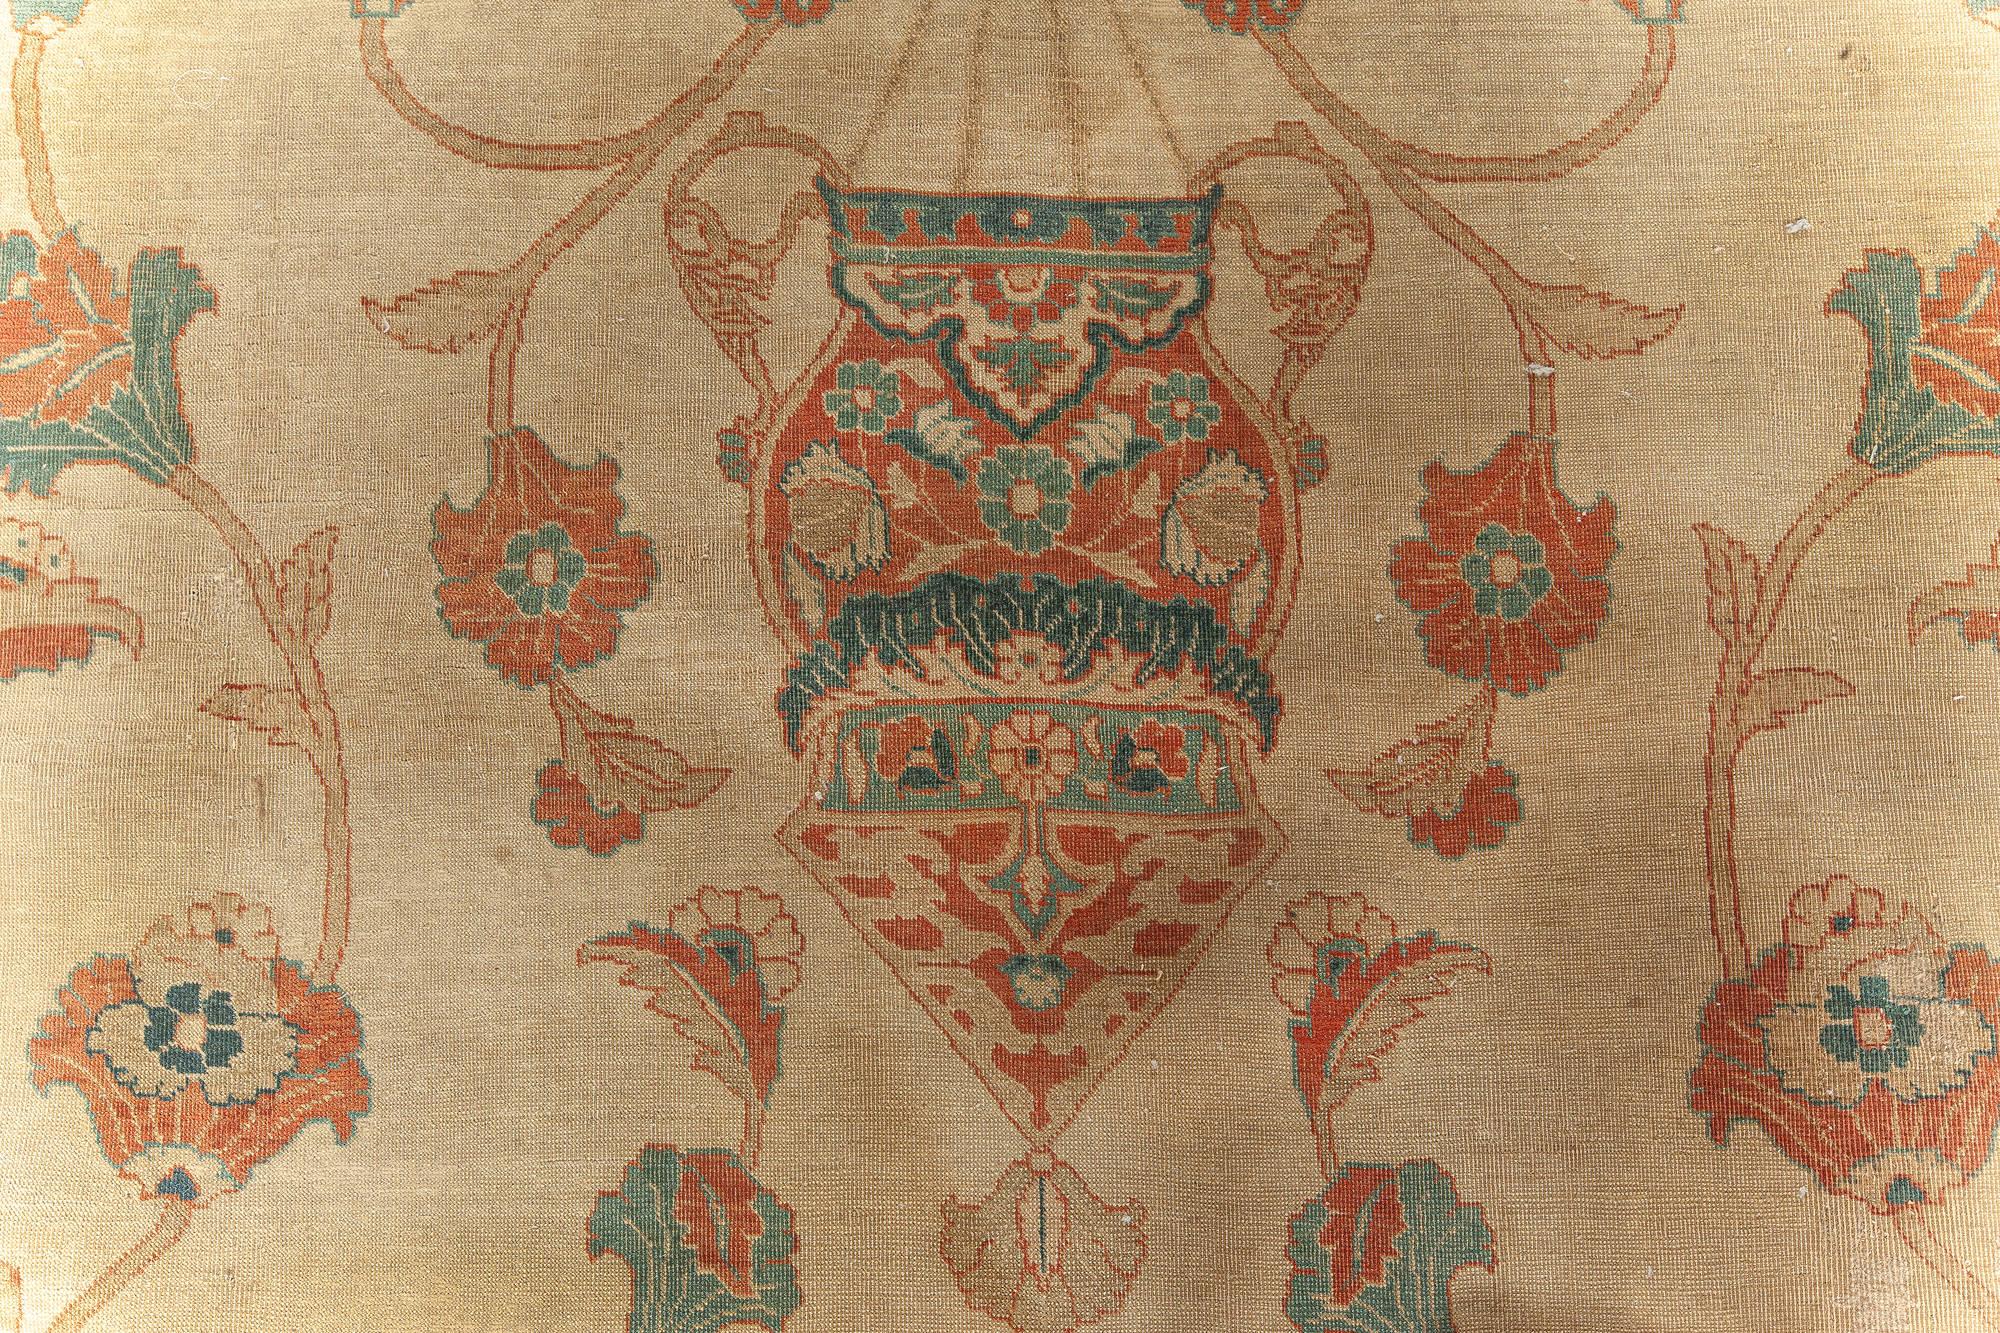 Large 19th century Persian Tabriz handmade wool rug
Size: 14'3